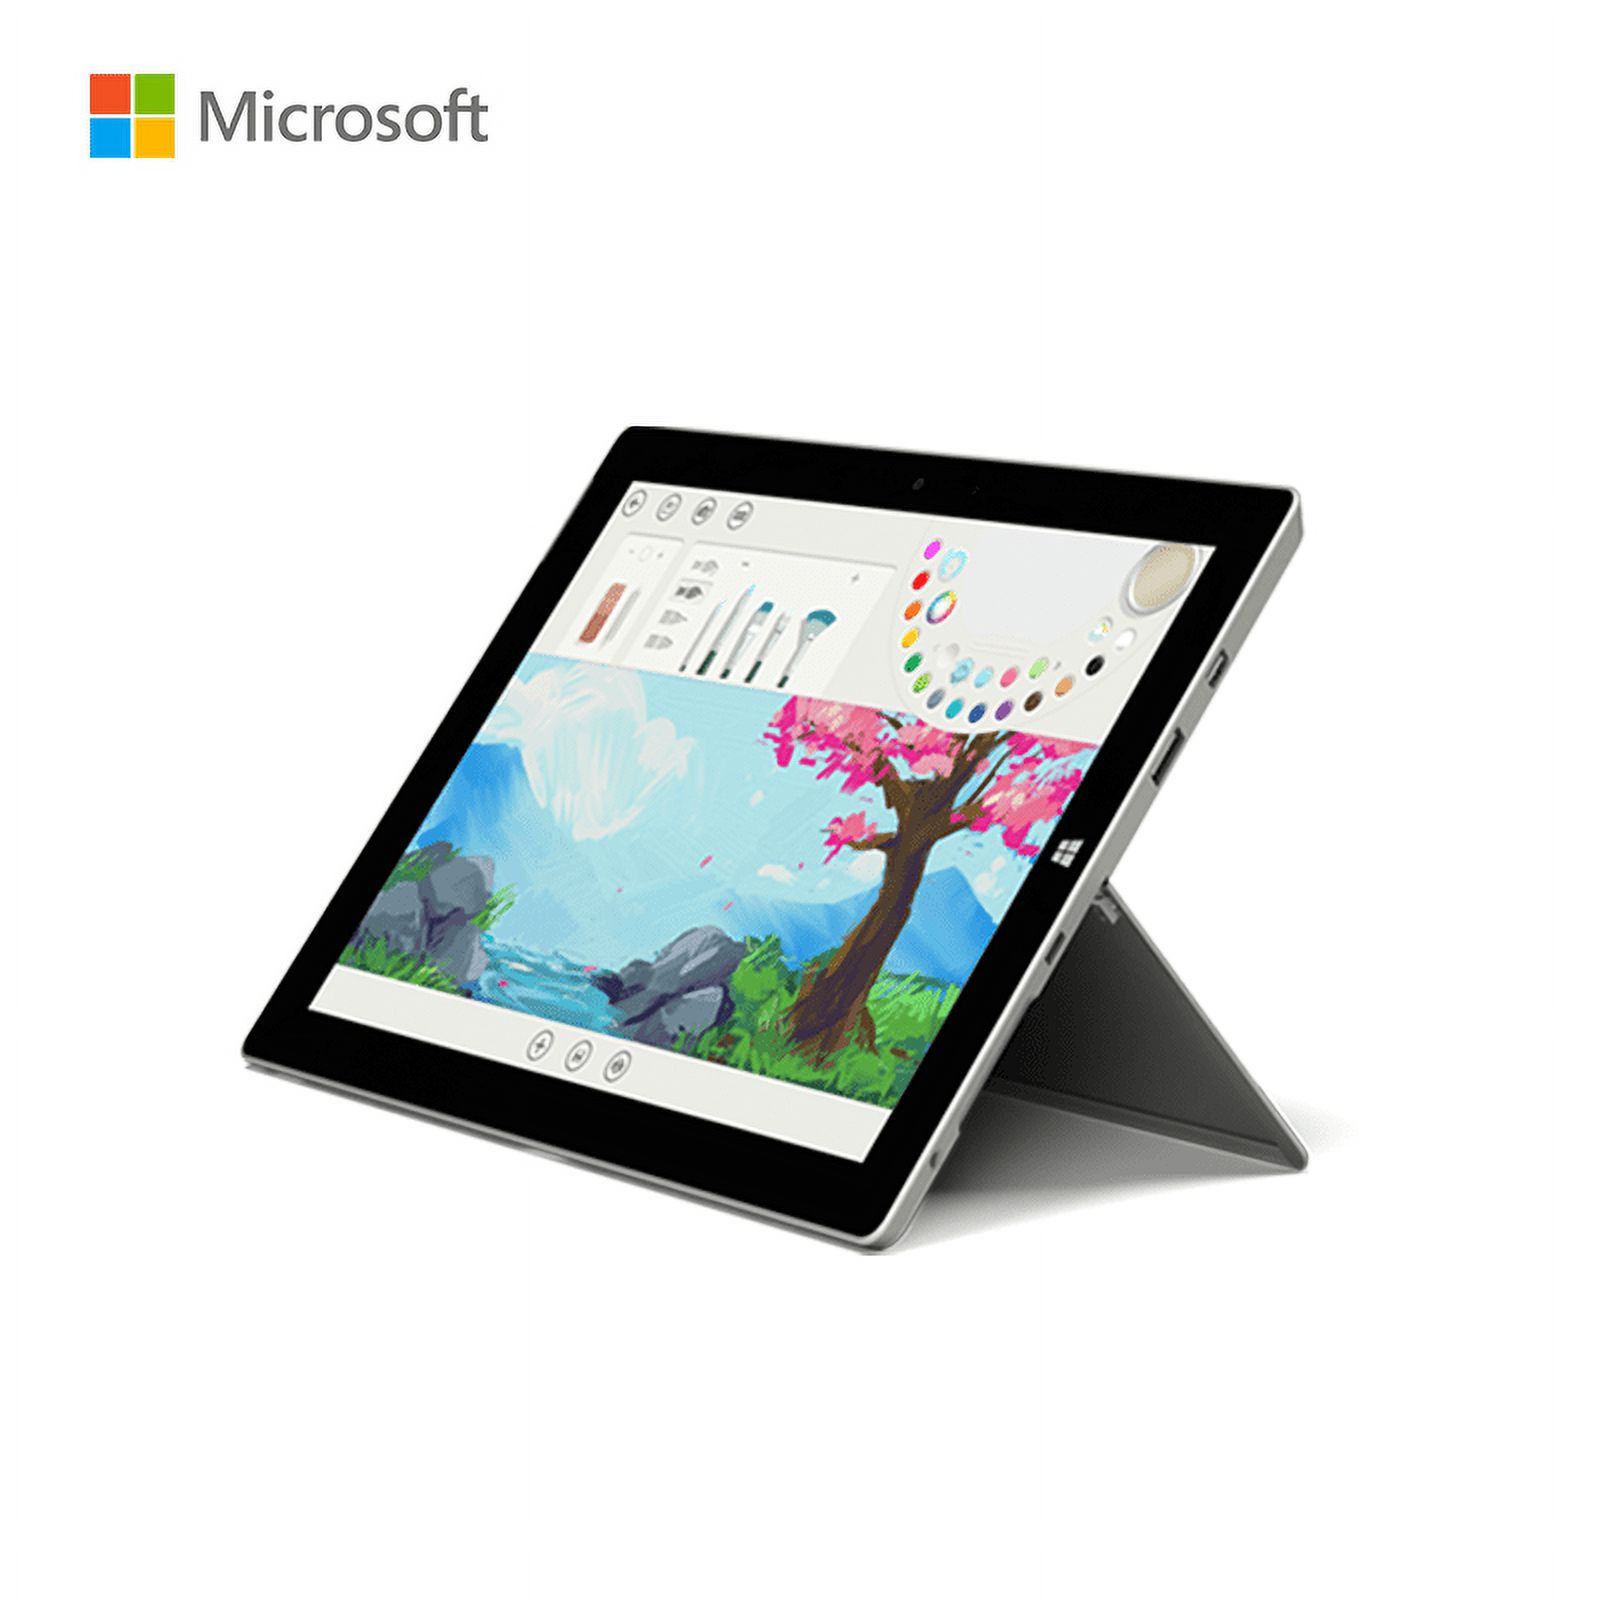 Microsoft Surface 3 Atom, 4 GB, 256 GB, Windows 10 Pro, WIFI + LTE - USED - image 1 of 1